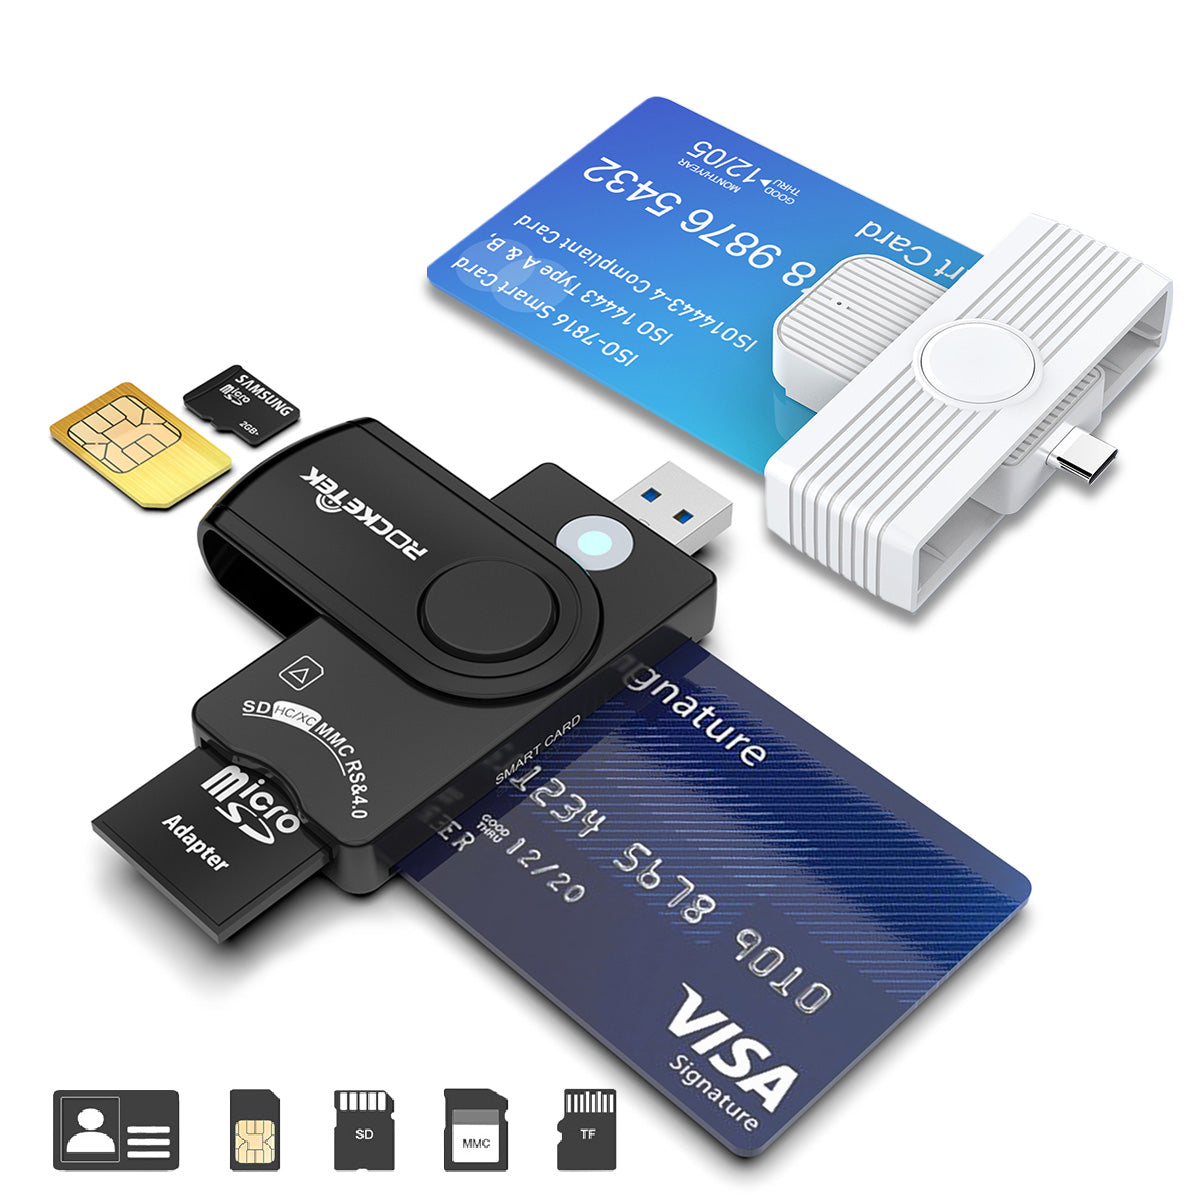 ICカード 確定申告リーダー マイナカード カードリーダー ICカードリーダー マイナンバー対応 ライター マイナポイント ICチップ 住民基本台帳カード 電子申告 SD MicroSD SIM 多機能 USB接続 e-Tax 国税電子申告 USBマルチ